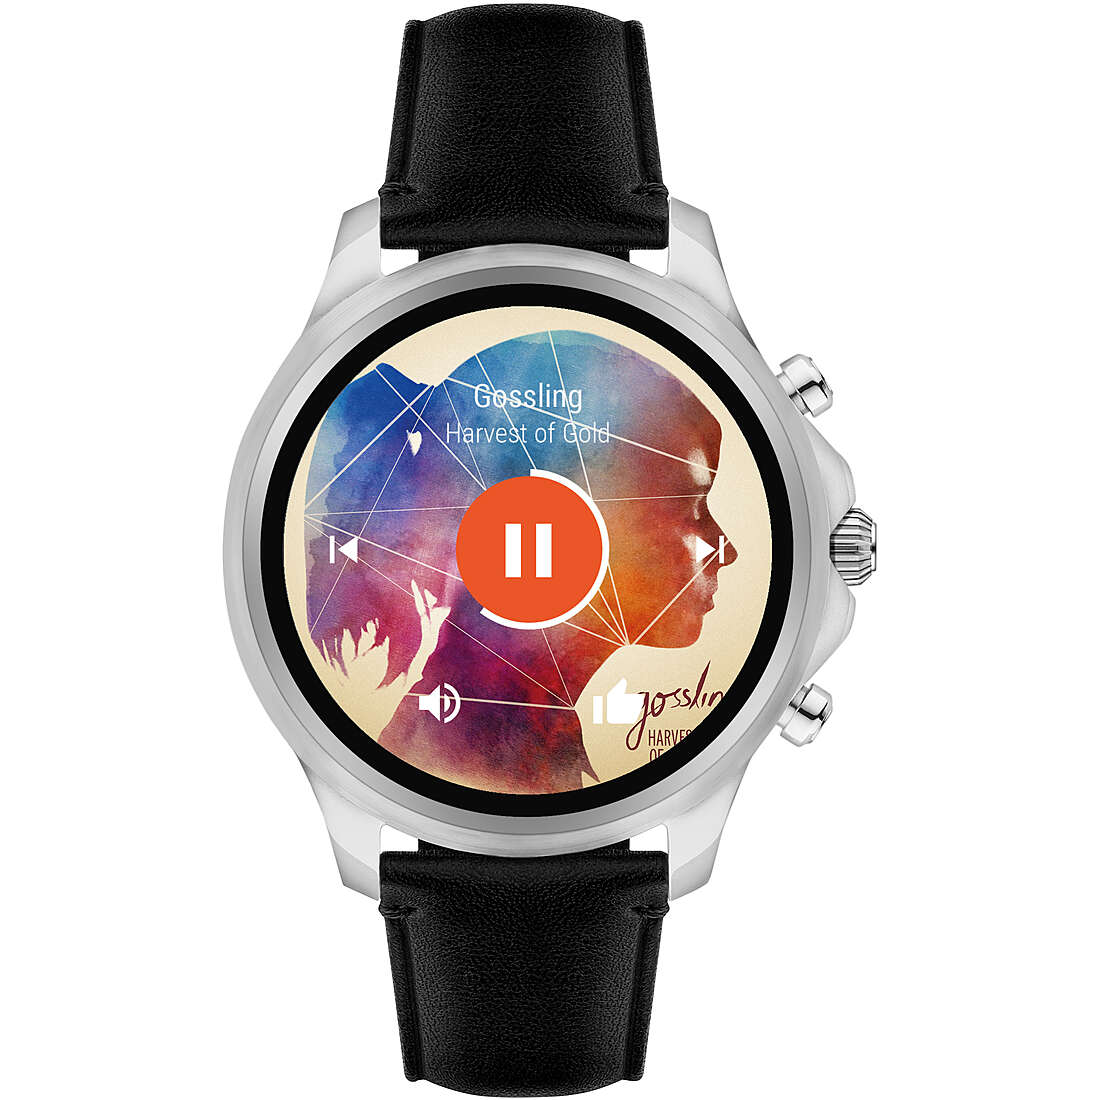 montre Smartwatch homme Emporio Armani ART5003